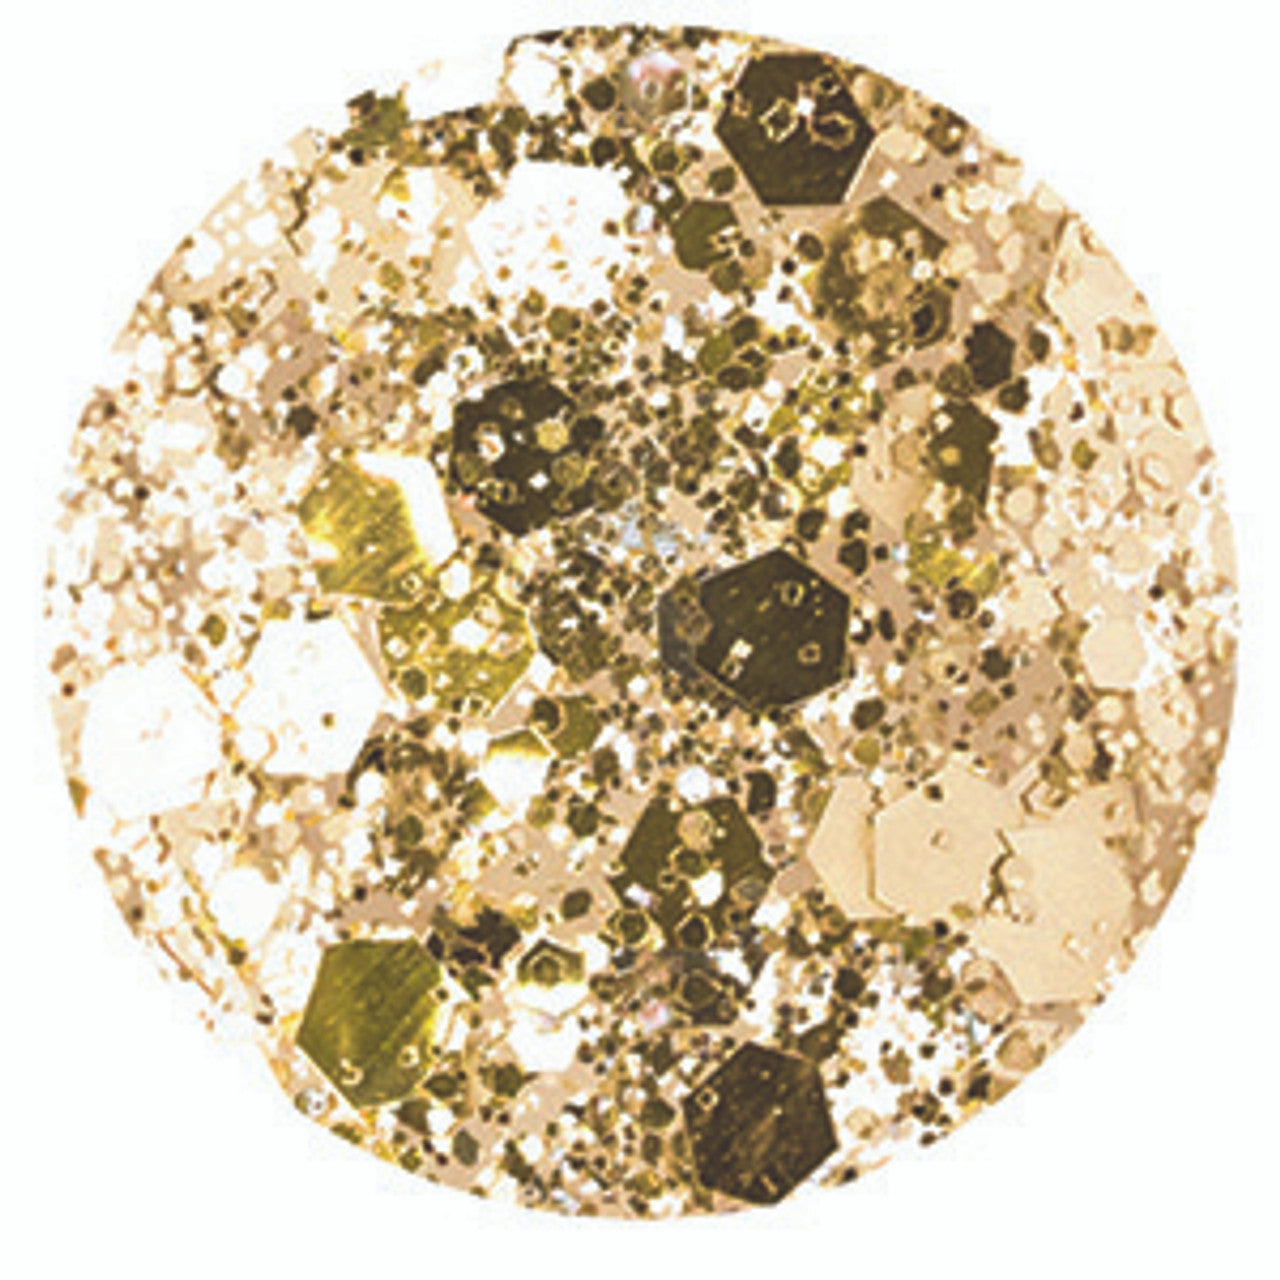 Gelish Soak-Off Gel Polish - All That Glitters is Gold